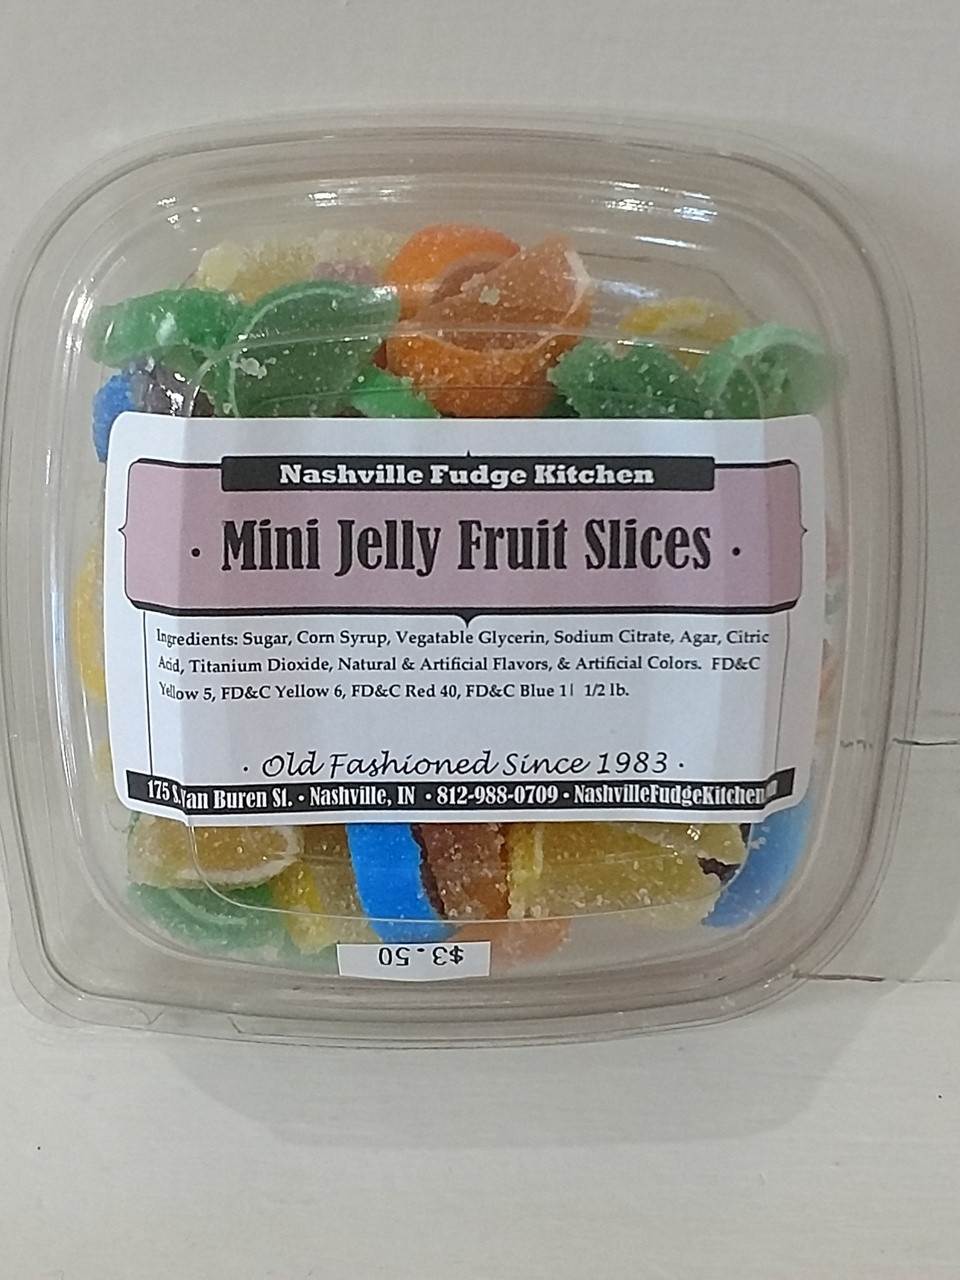 Jelly Belly Grab & Go bags - Nashville Fudge Kitchen